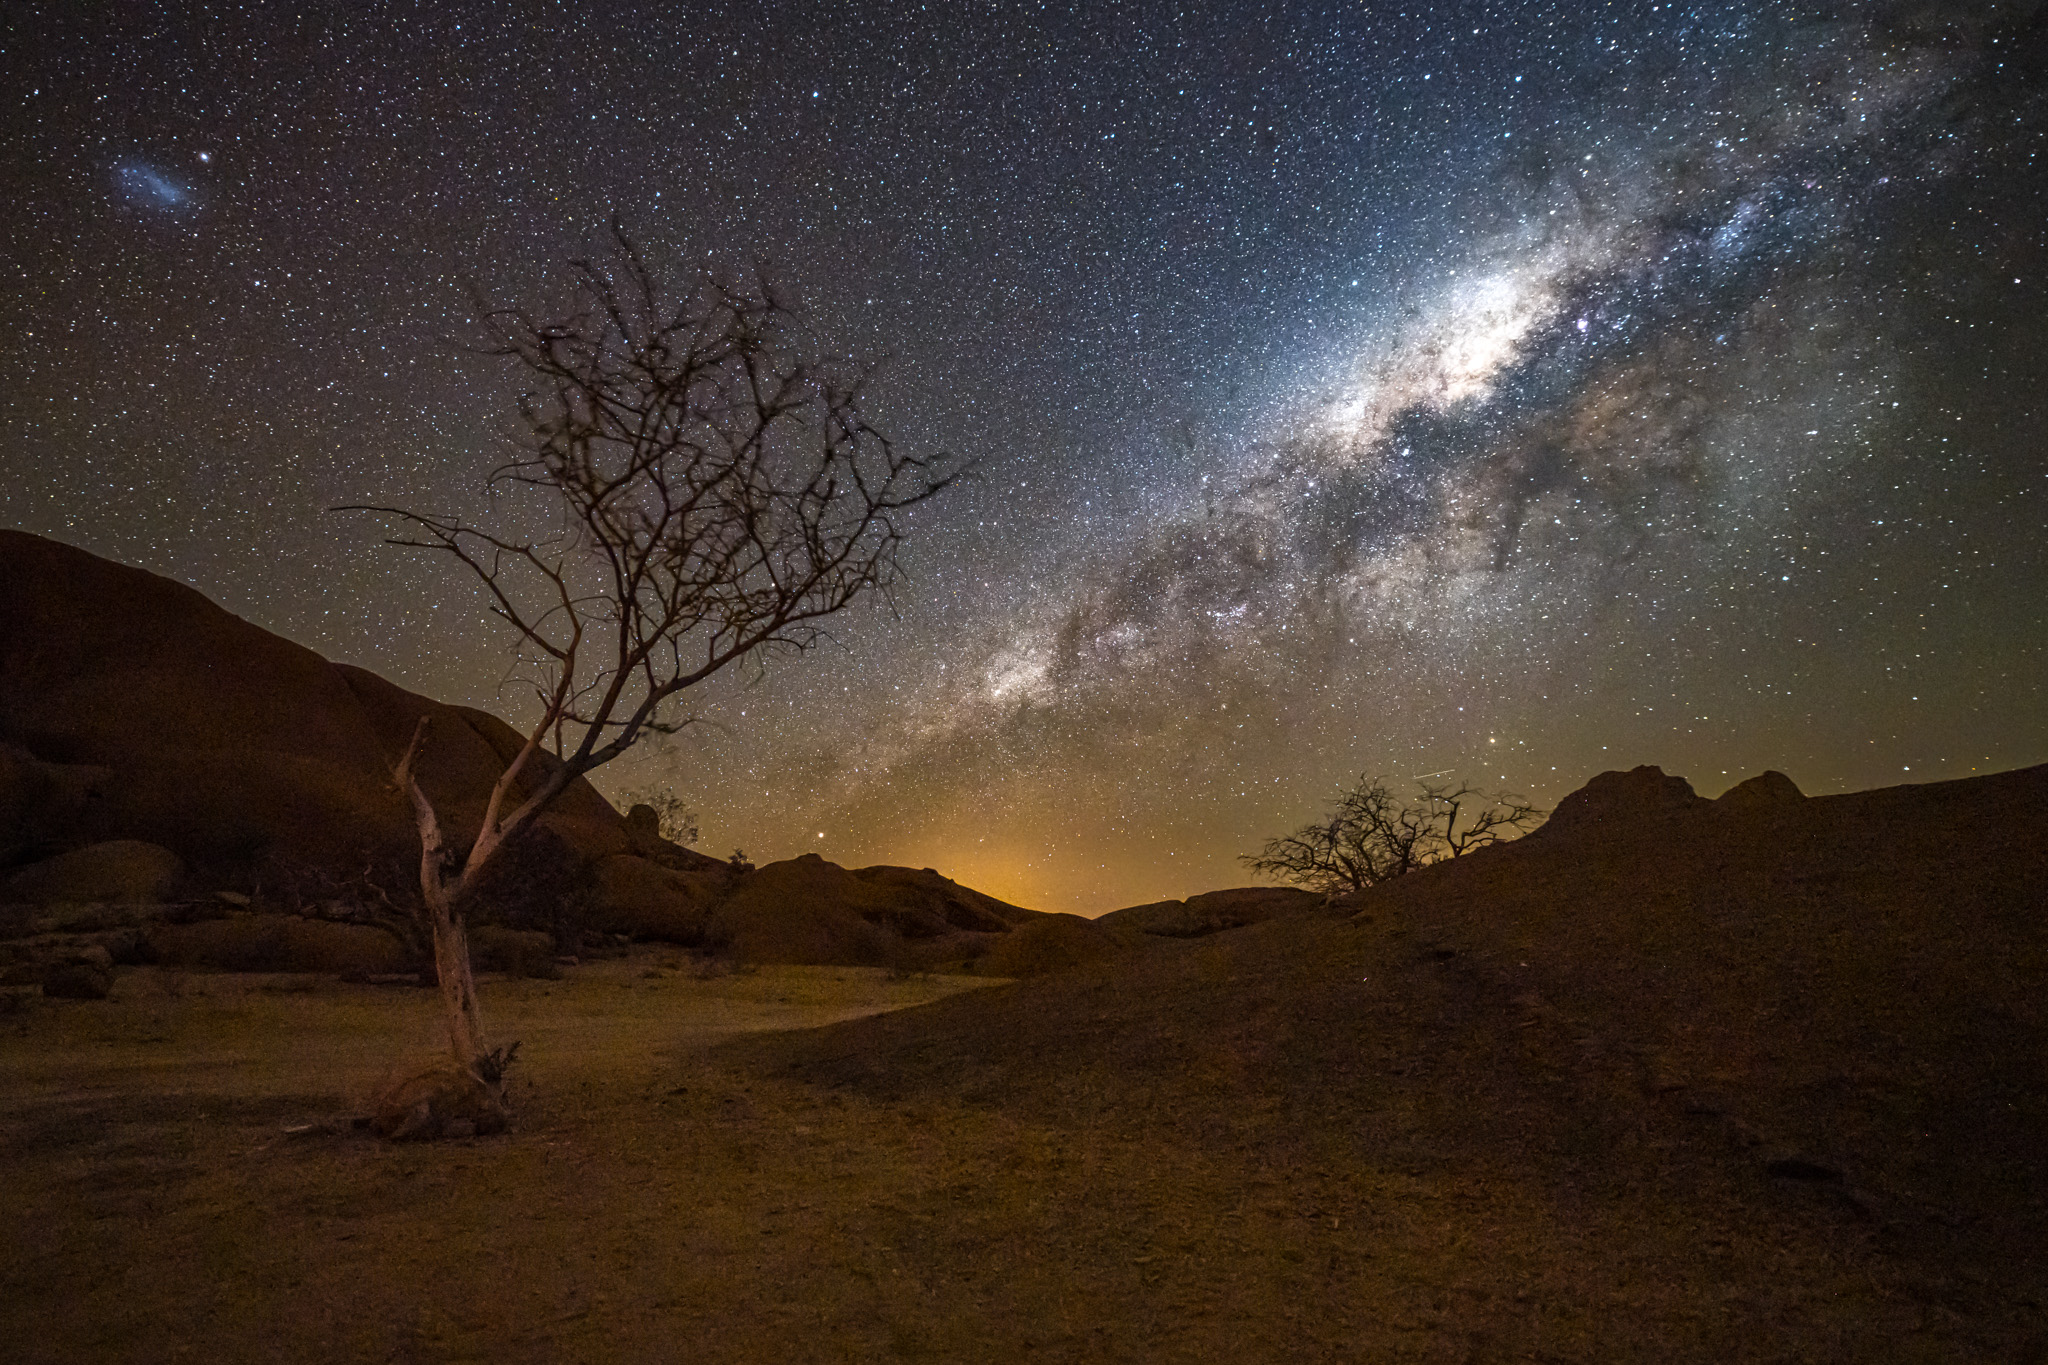 Droga Mleczna, Namibia